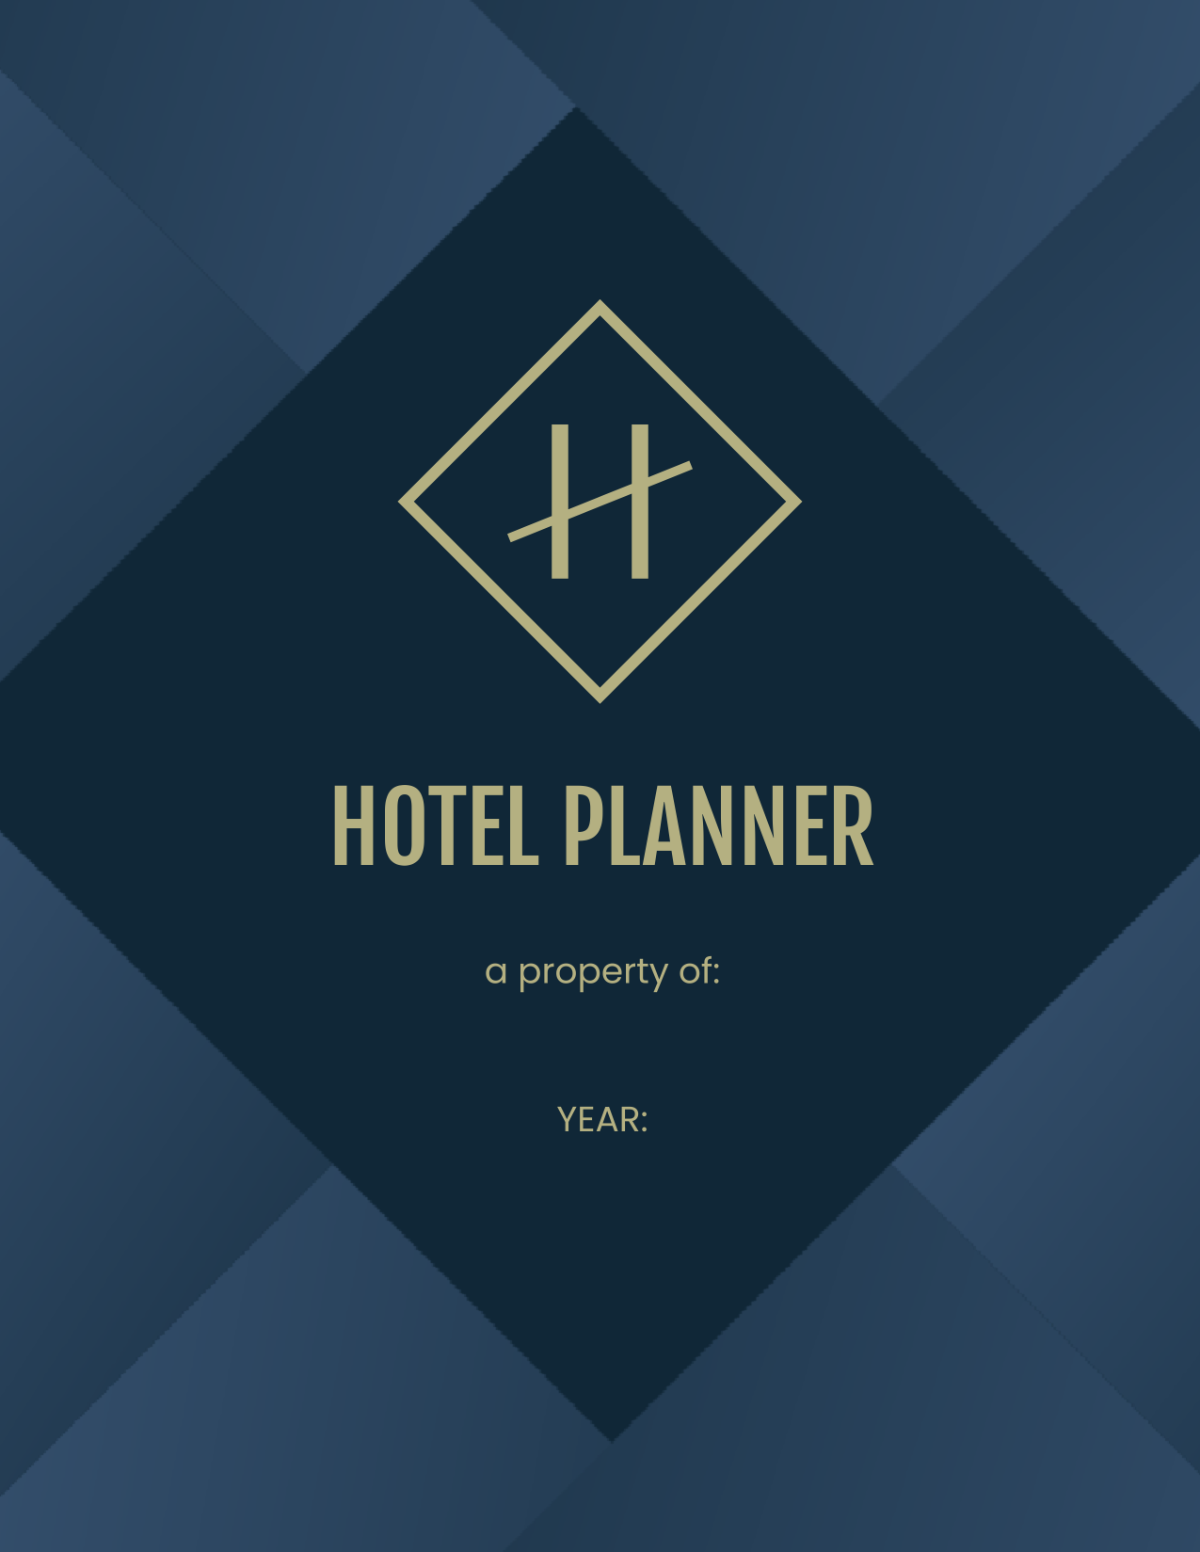 Editable Hotel Planner